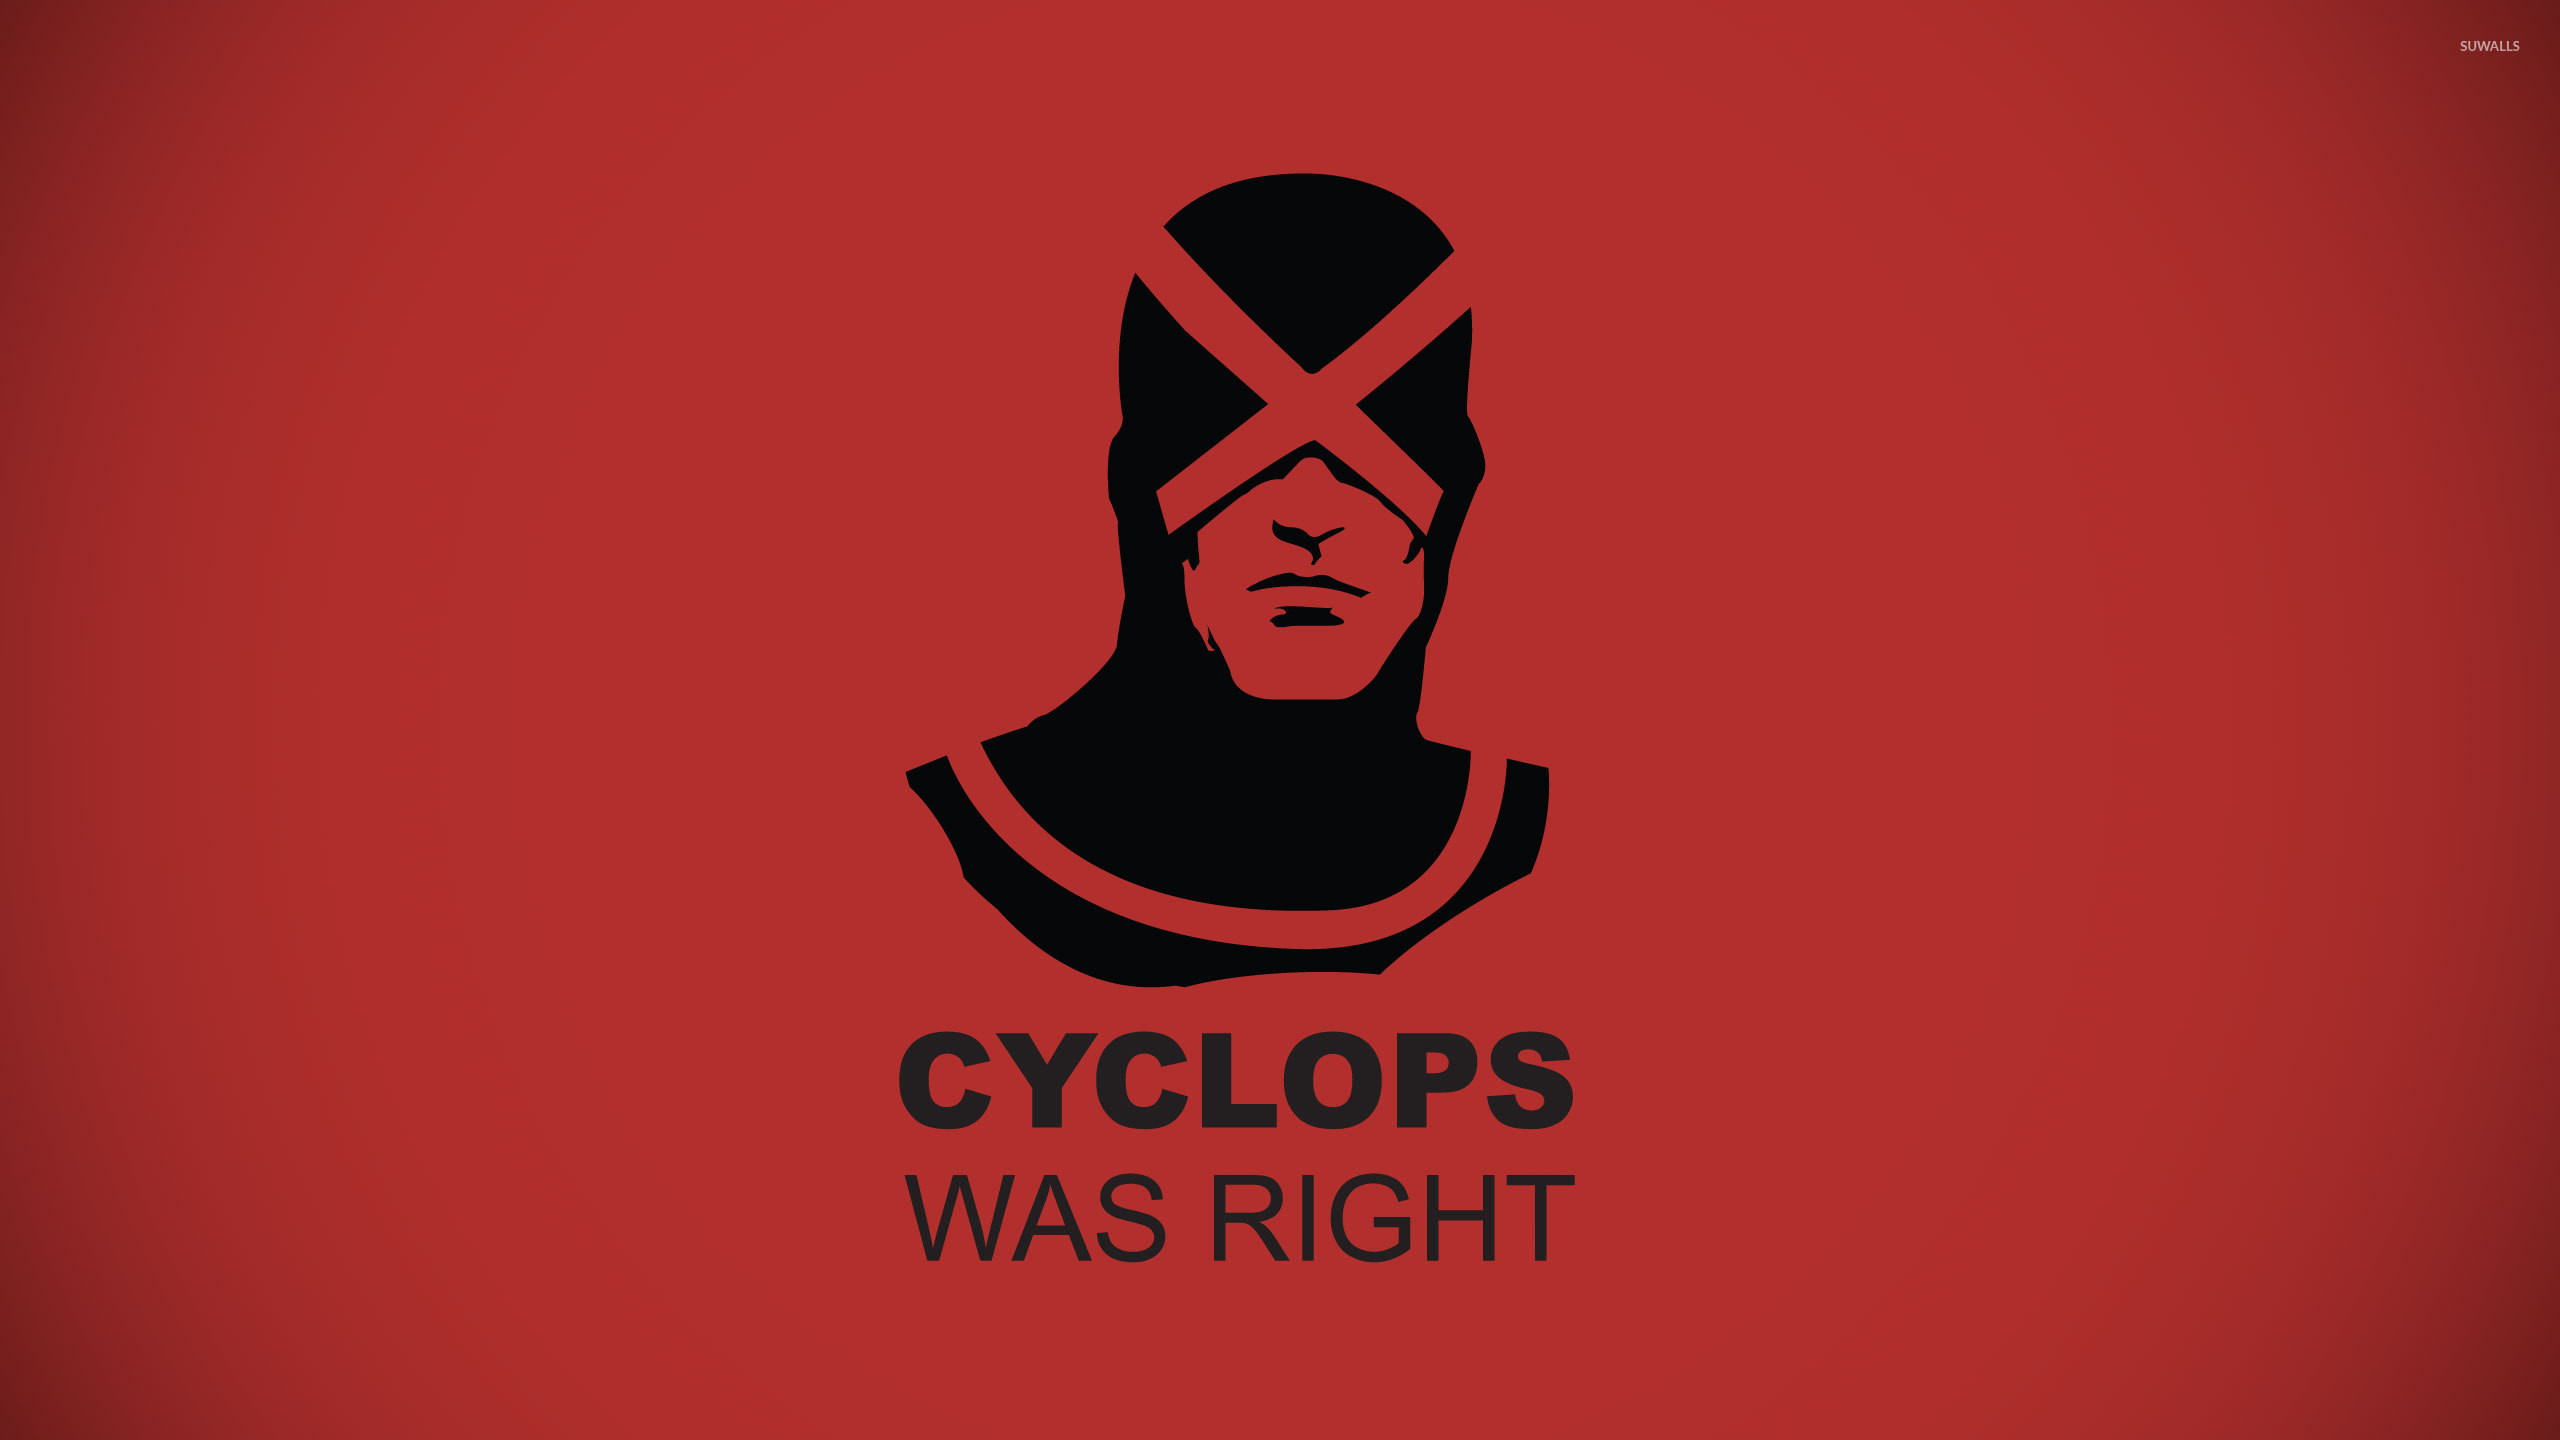 2560x1440 Cyclops was right - X-Men wallpaper  jpg